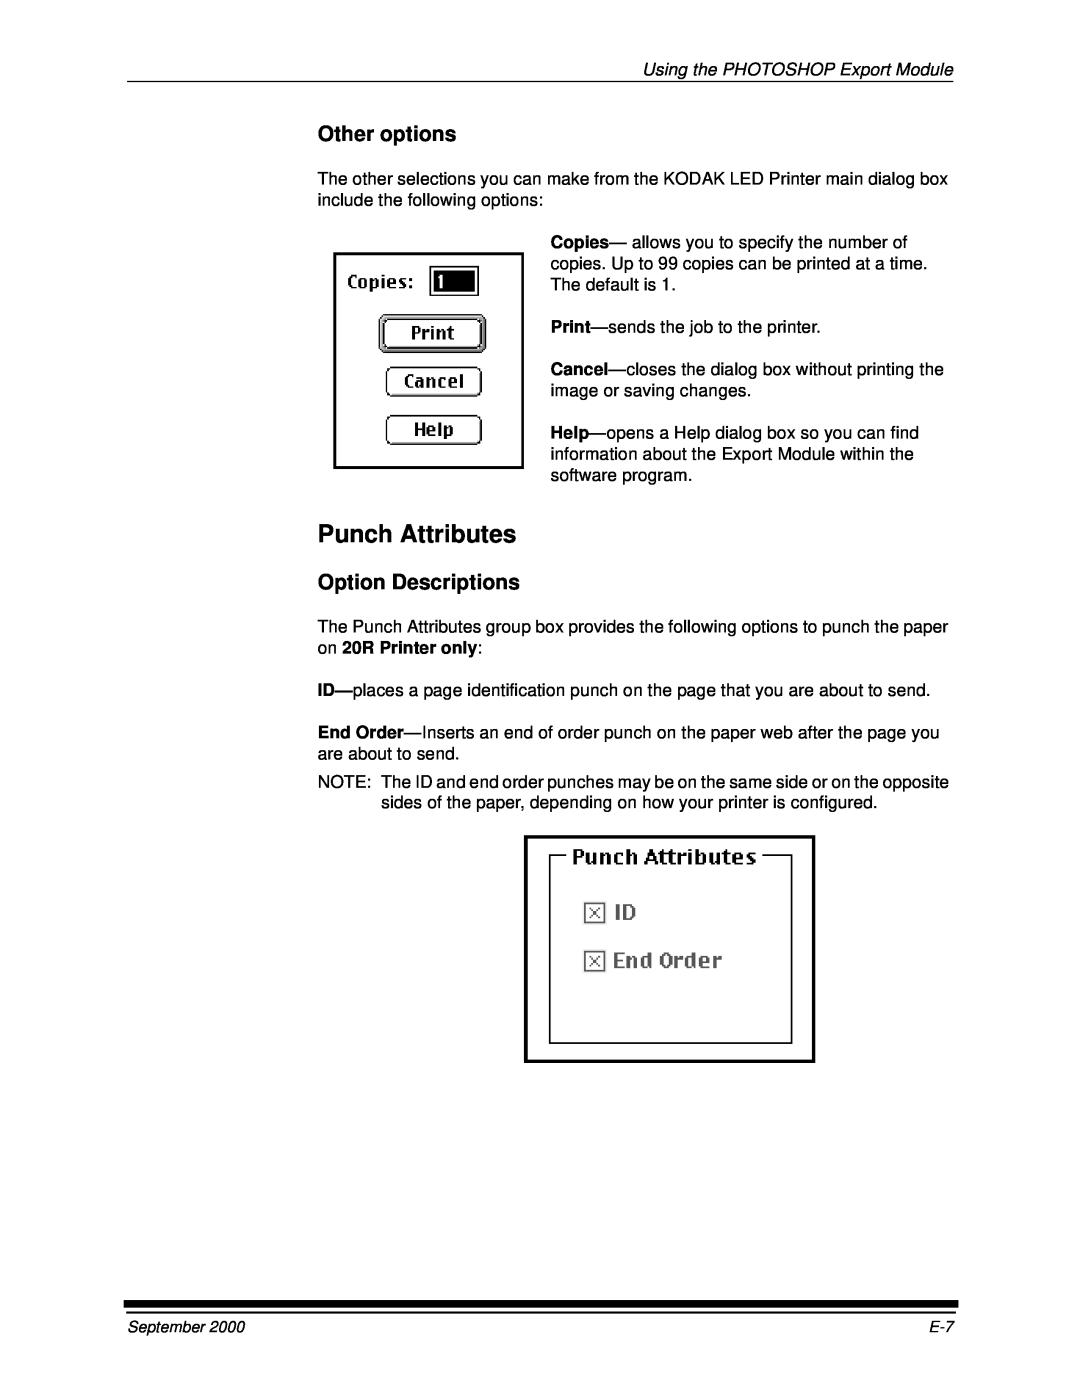 Kodak 20R manual Punch Attributes, Other options, Option Descriptions, Using the PHOTOSHOP Export Module 